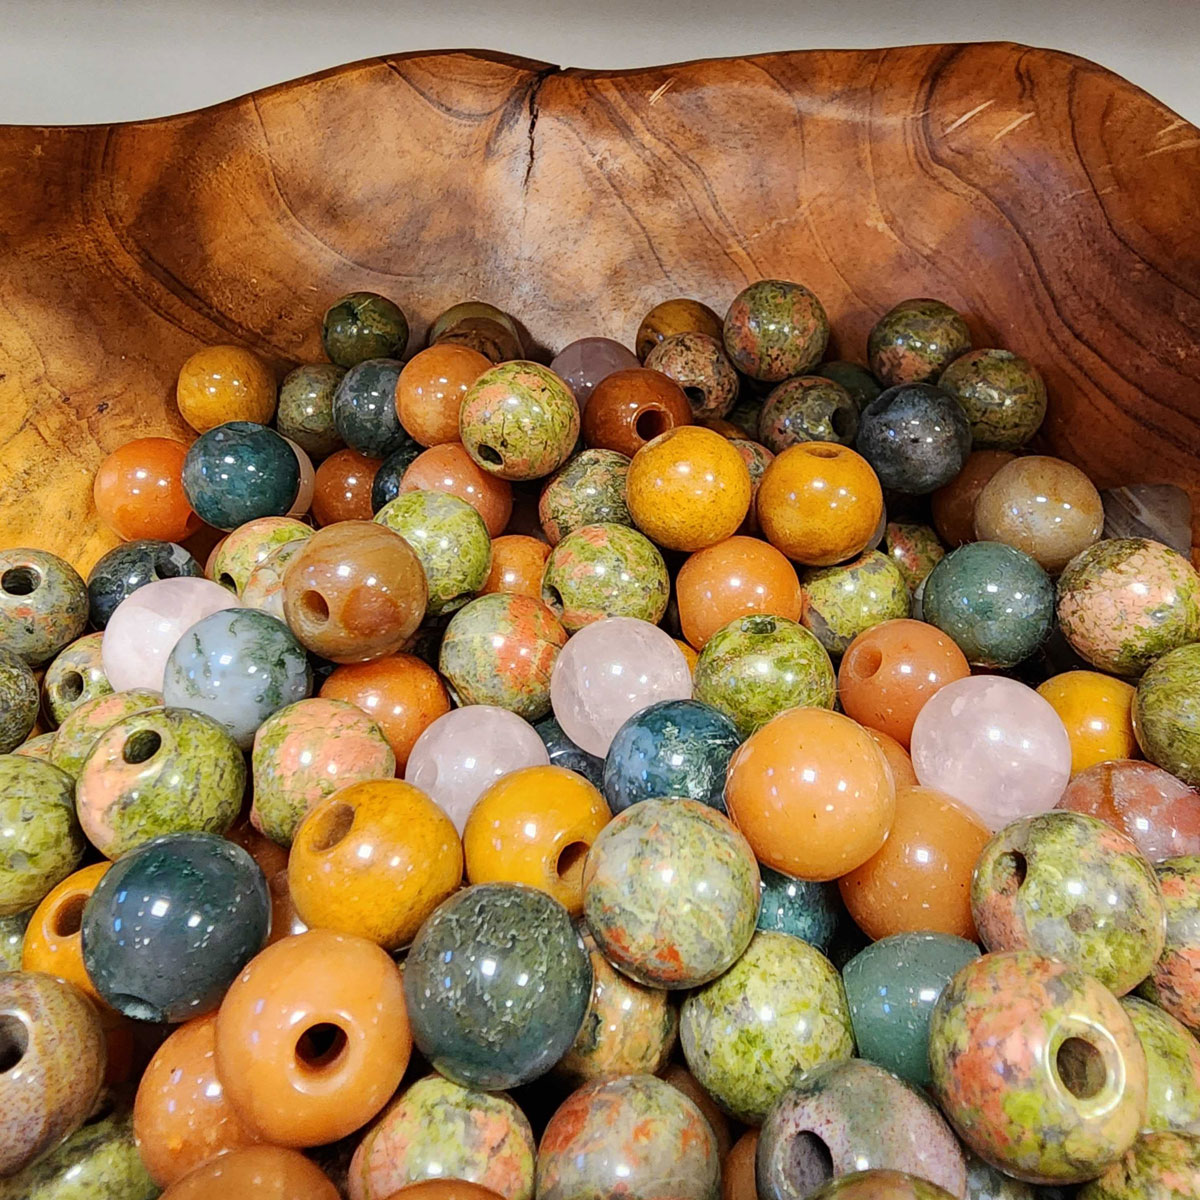 stone beads